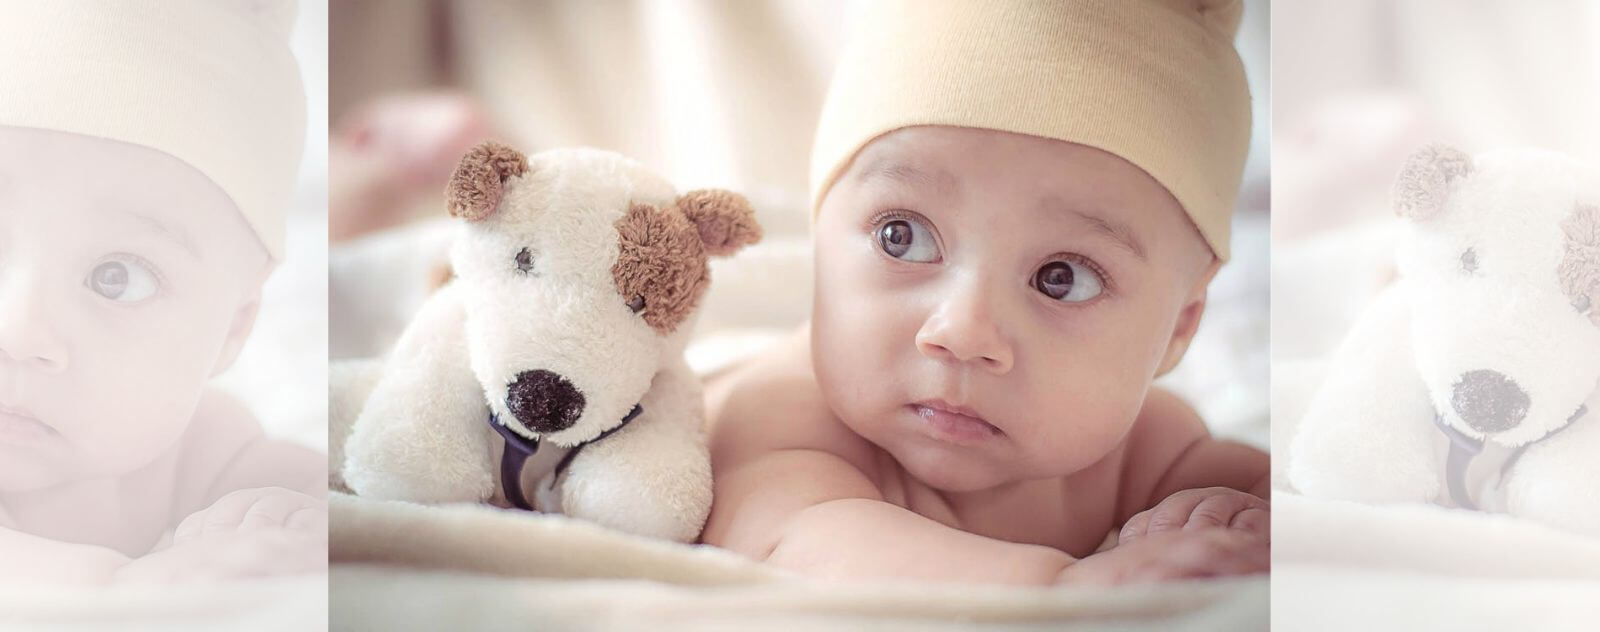 Infant with his Doudou Doudou